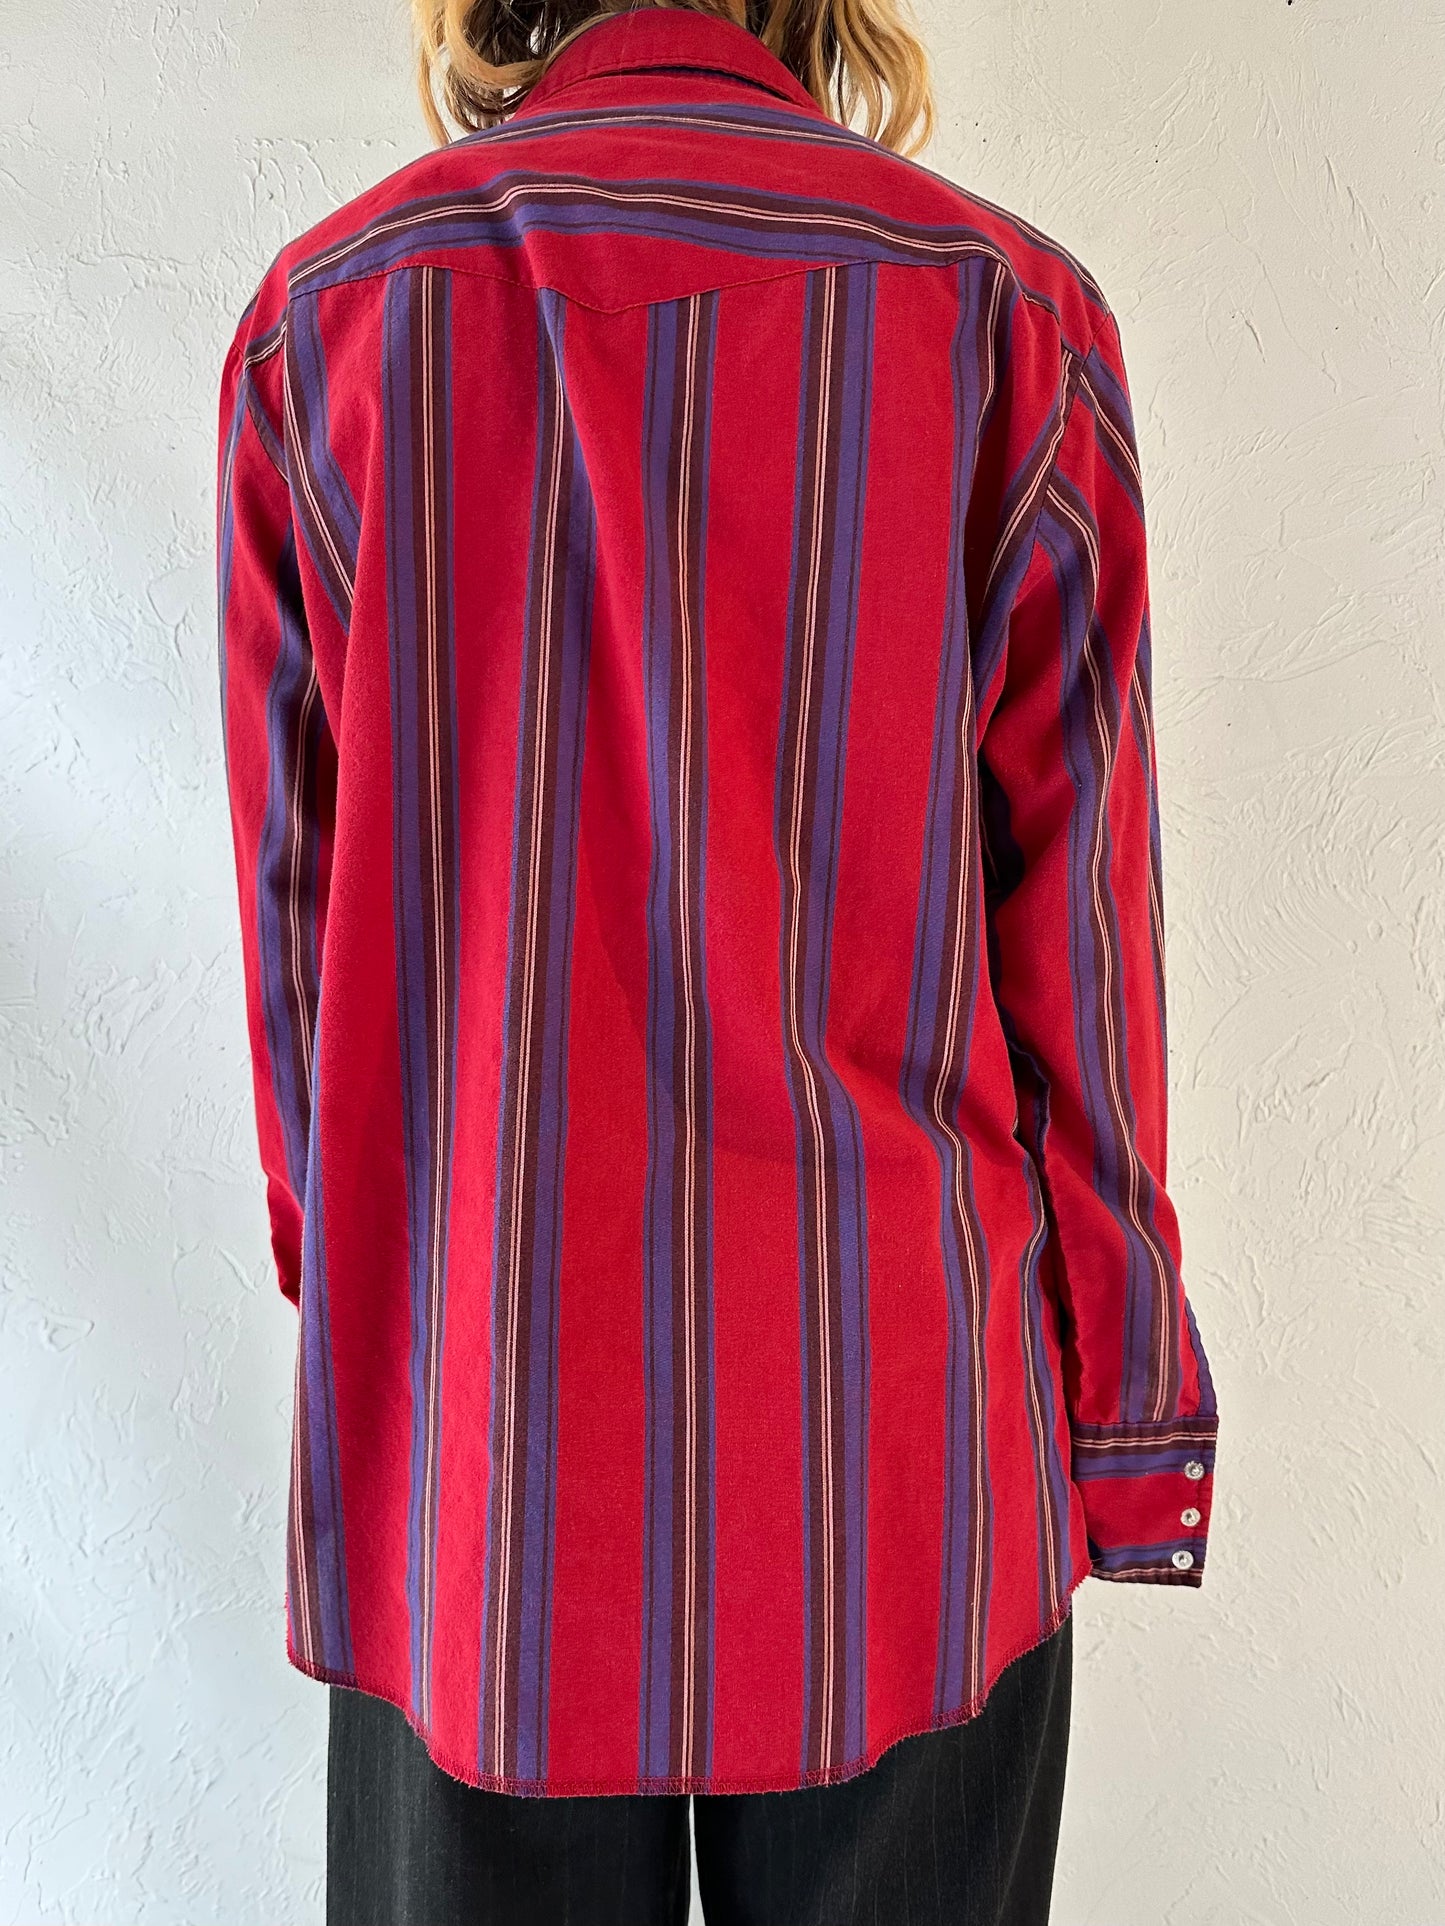 Vintage 'Wrangler' Red Snap Up Shirt / Medium